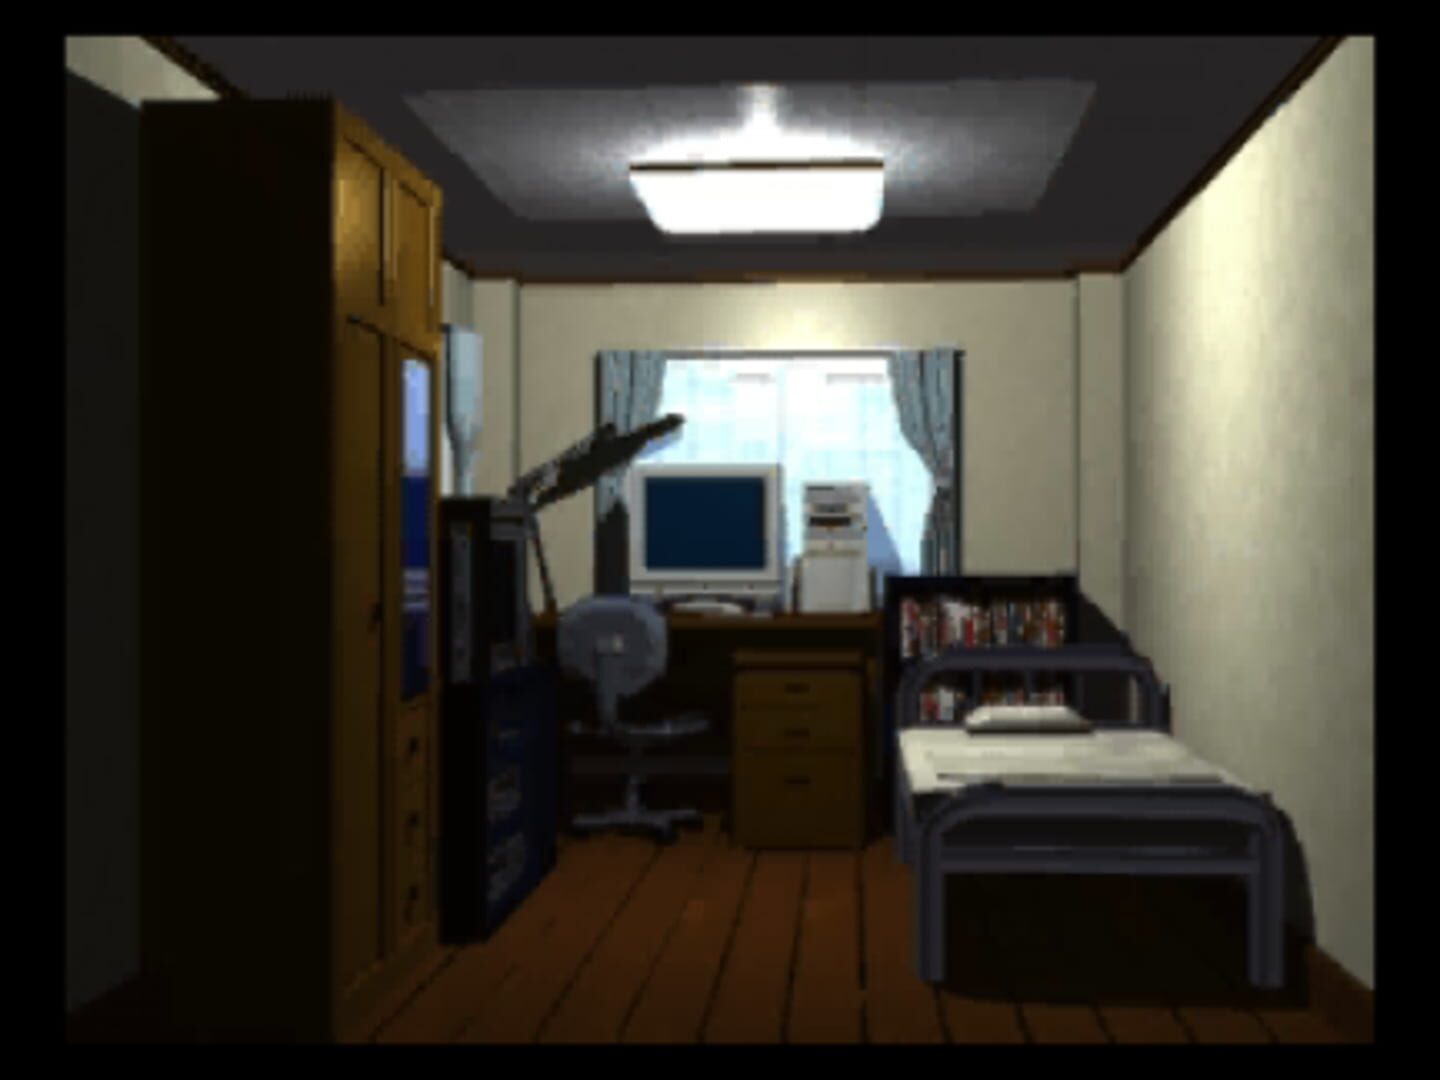 Captura de pantalla - Shin Megami Tensei: Devil Summoner